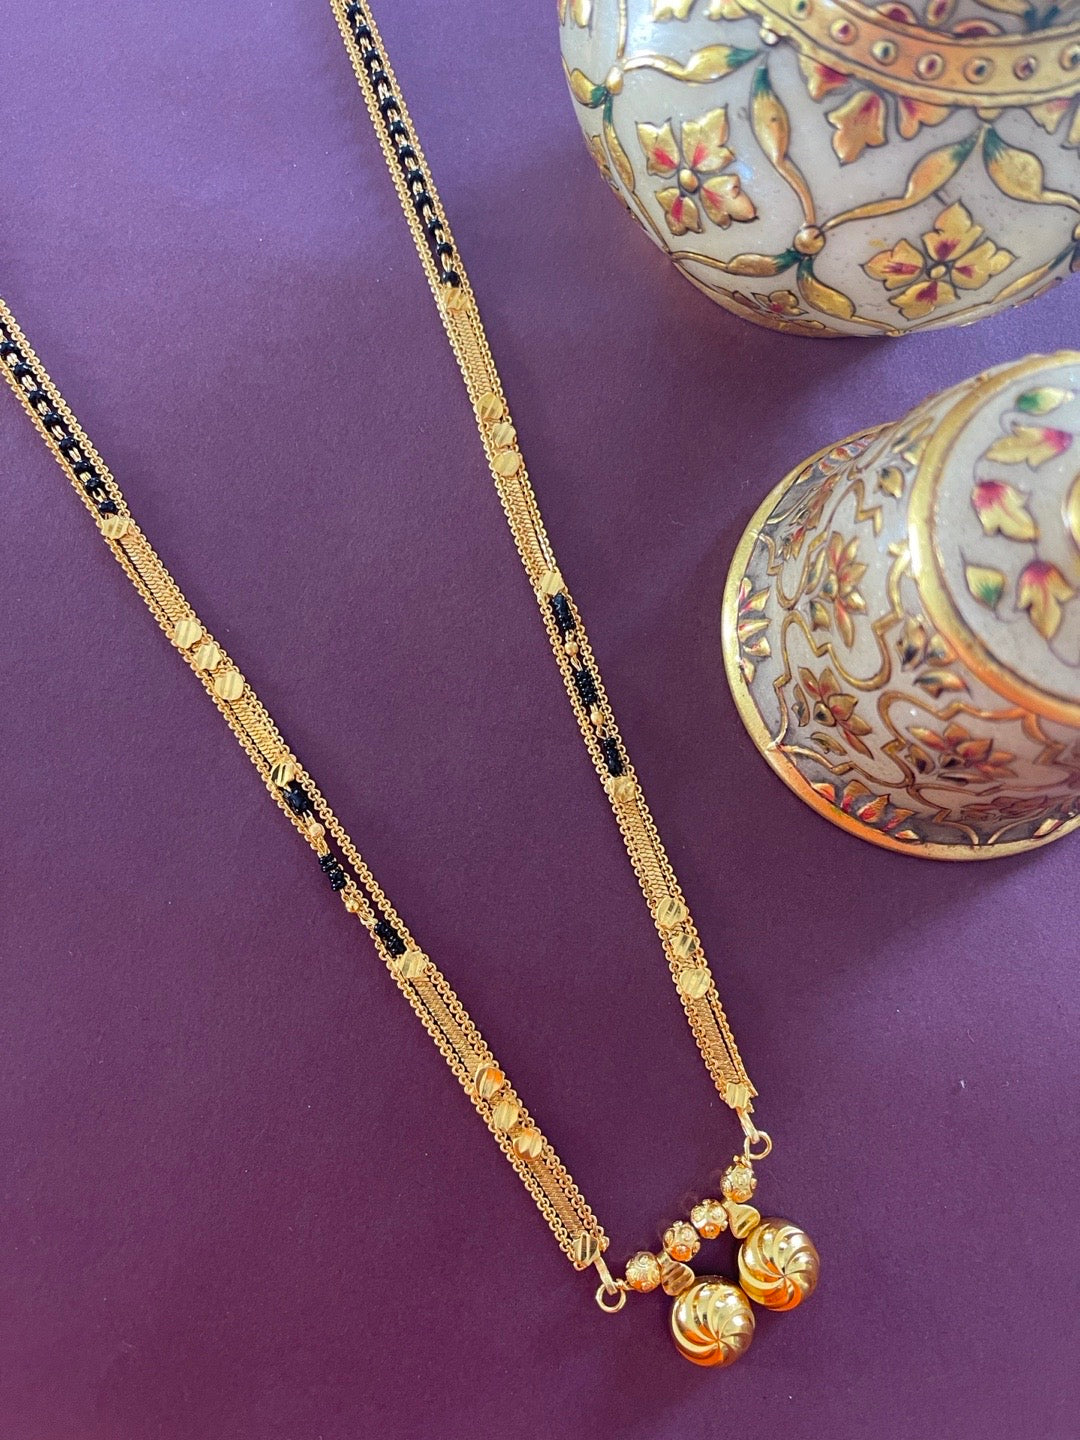 image for Maharashtrian Long Mangalsutra Vati Designs Layered Black Beads Gold Chain